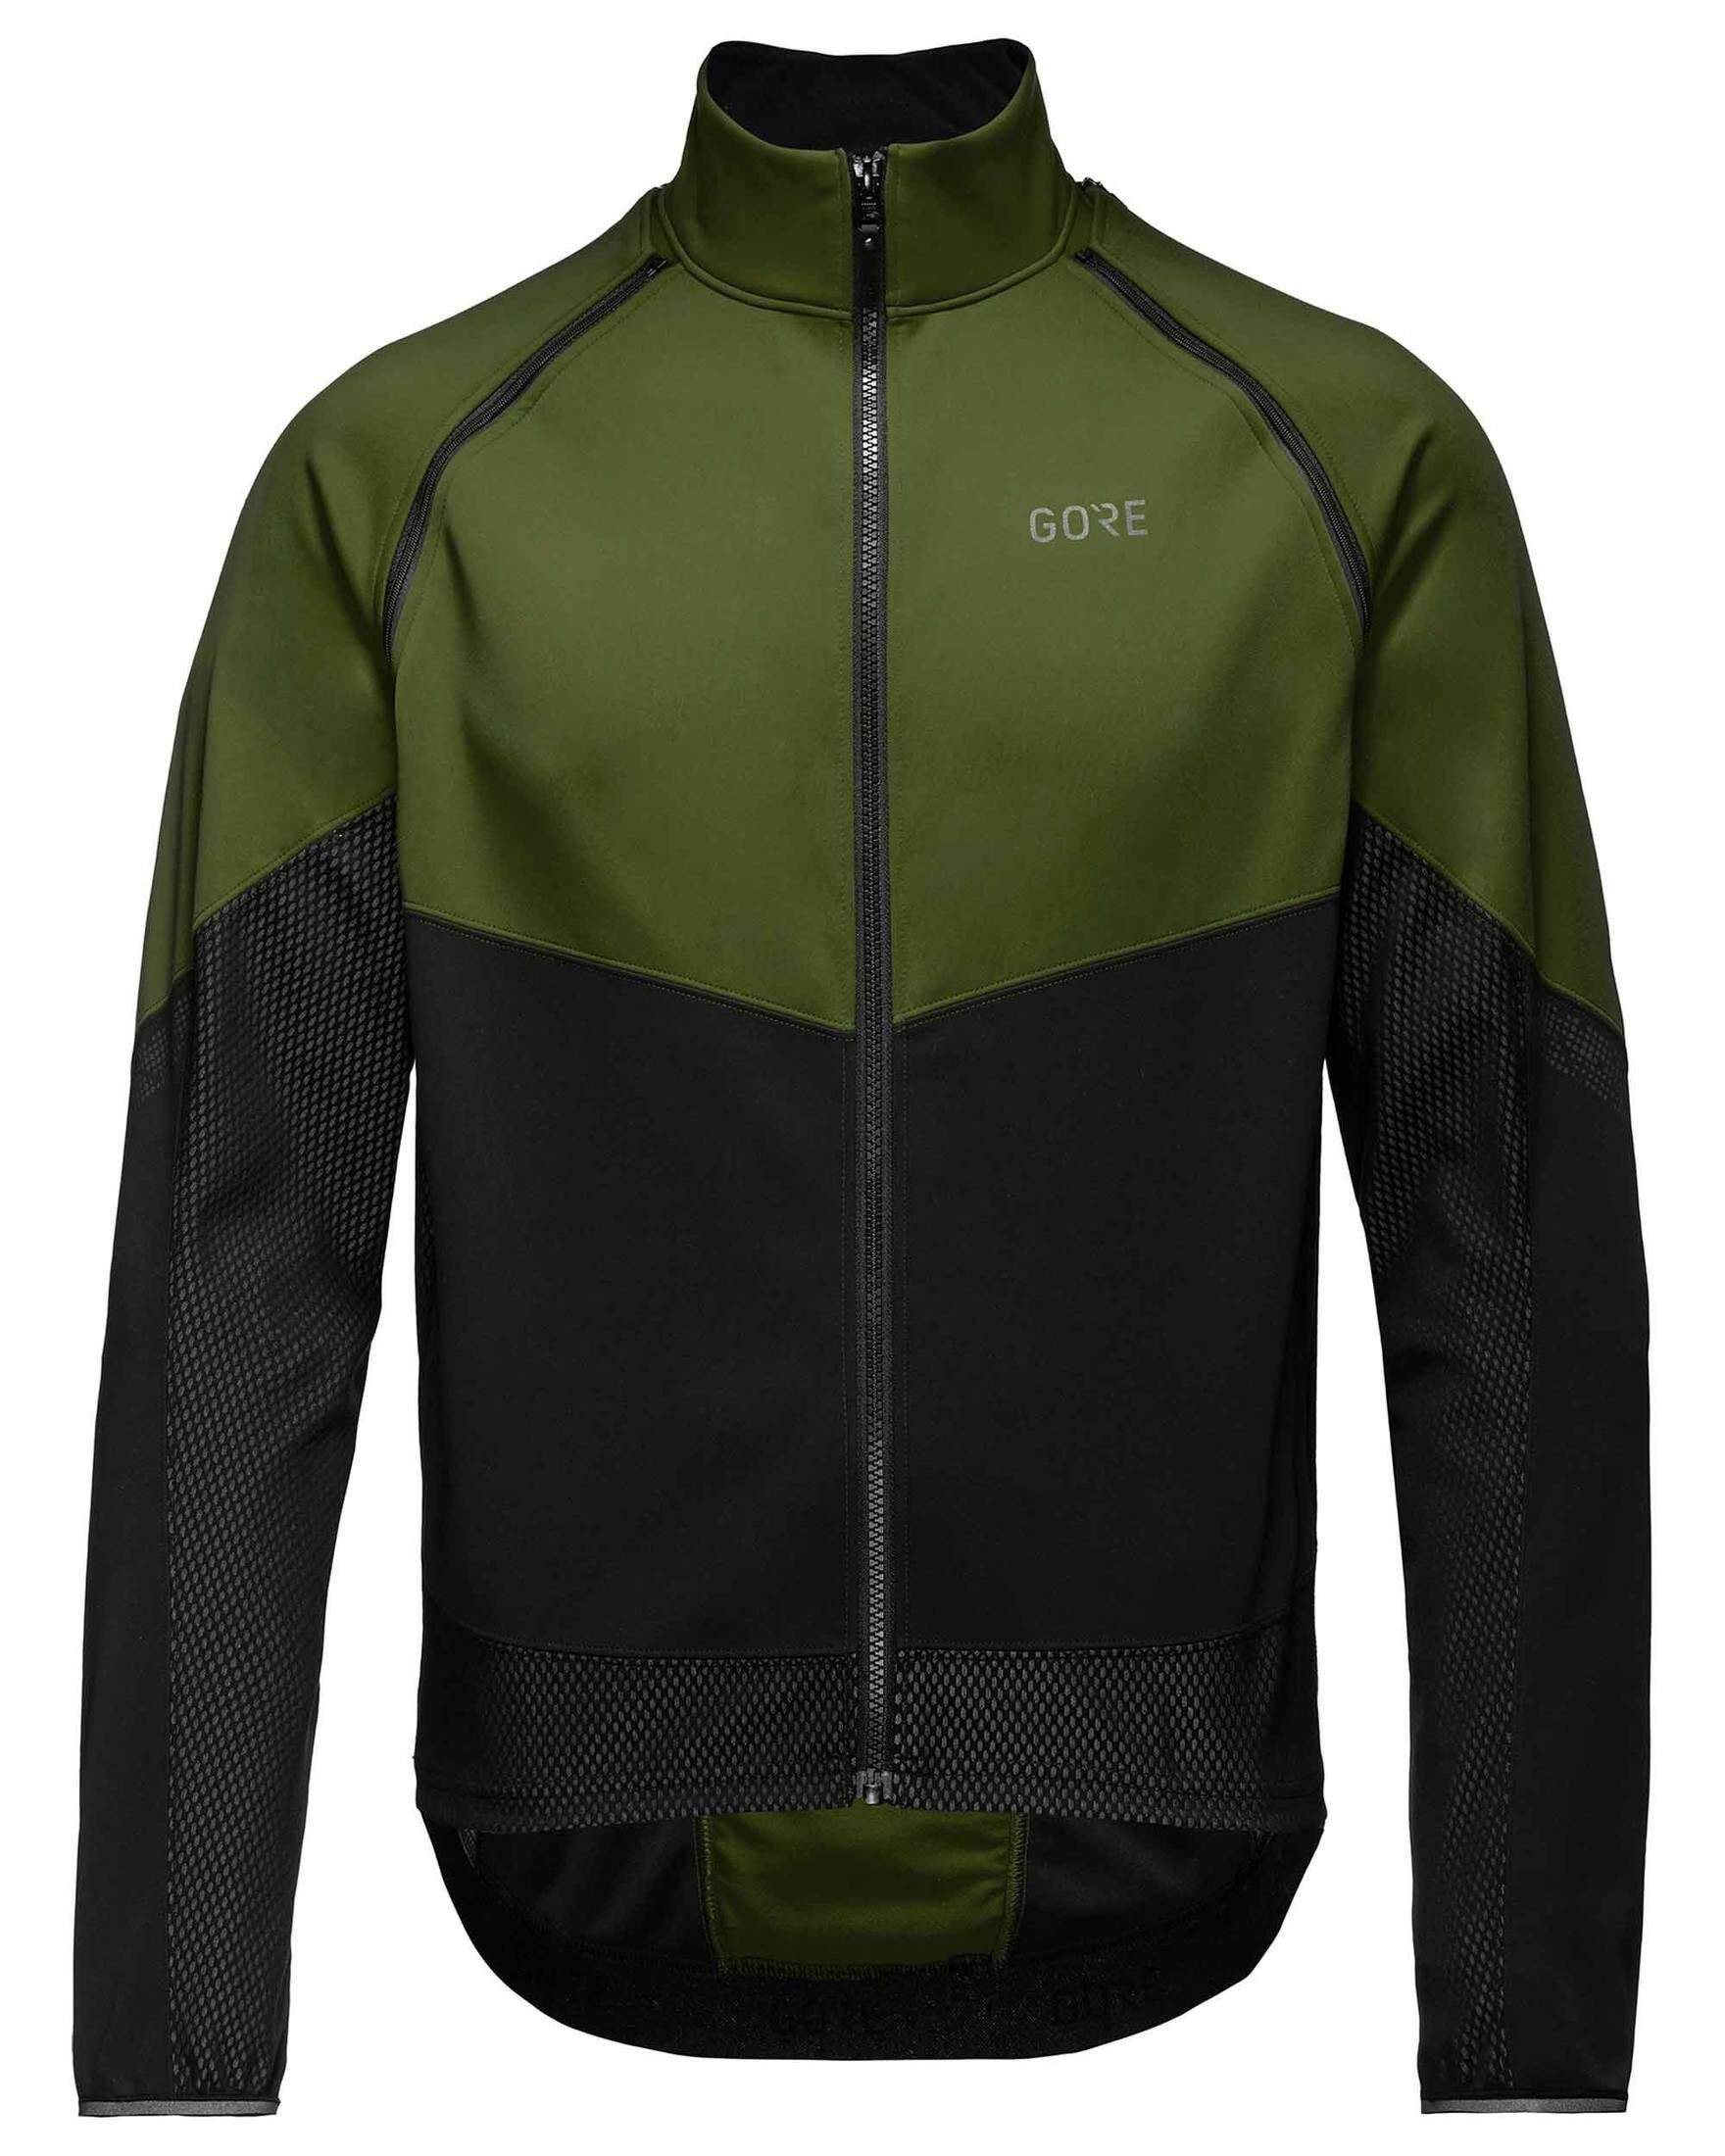 GORE® Wear Fahrradjacke Herren Fahrradjacke PHANTOM GTX I grün/schwarz (714)